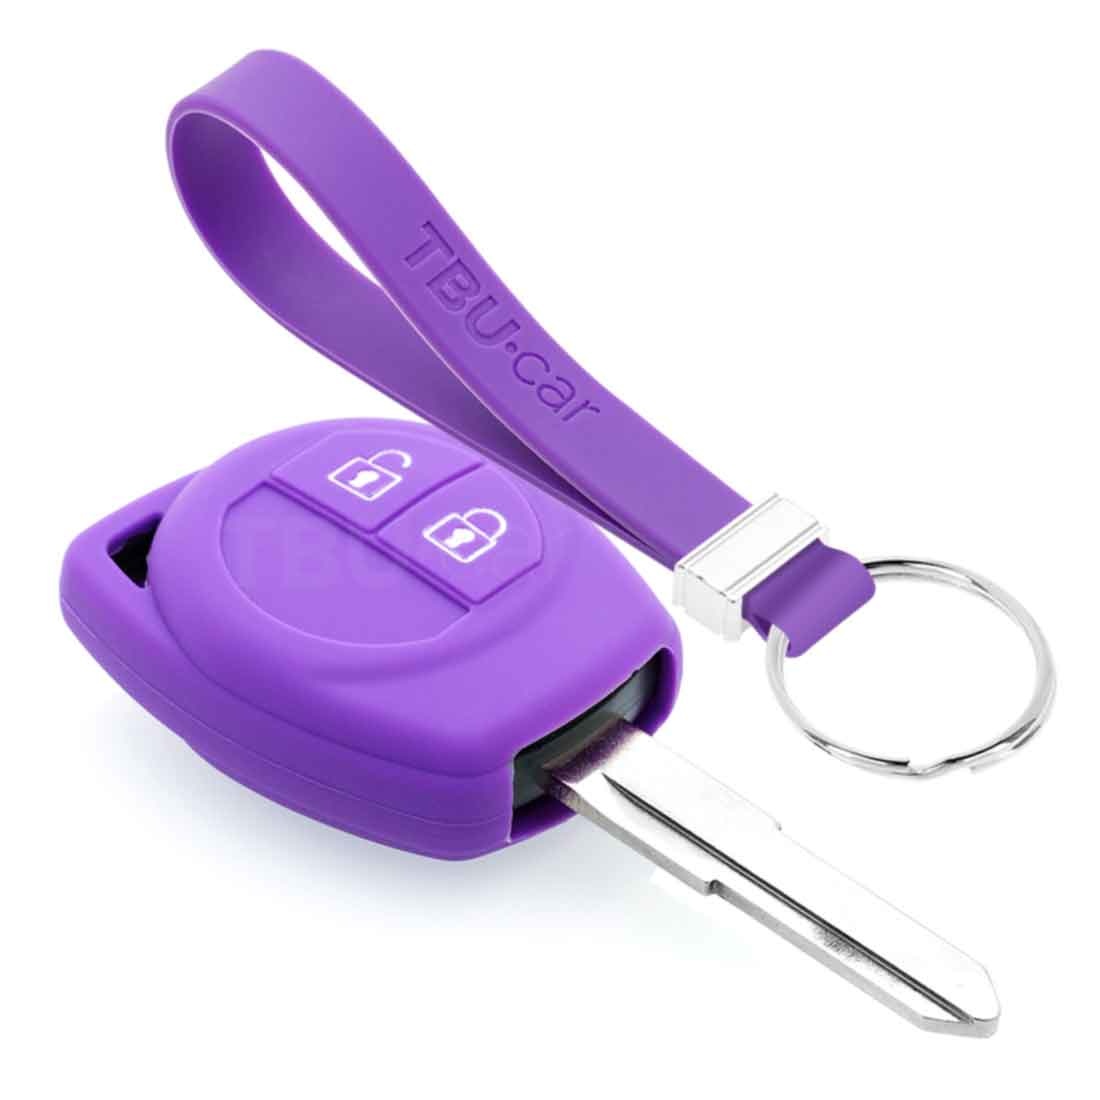 TBU car TBU car Autoschlüssel Hülle kompatibel mit Nissan 2 Tasten - Schutzhülle aus Silikon - Auto Schlüsselhülle Cover in Violett